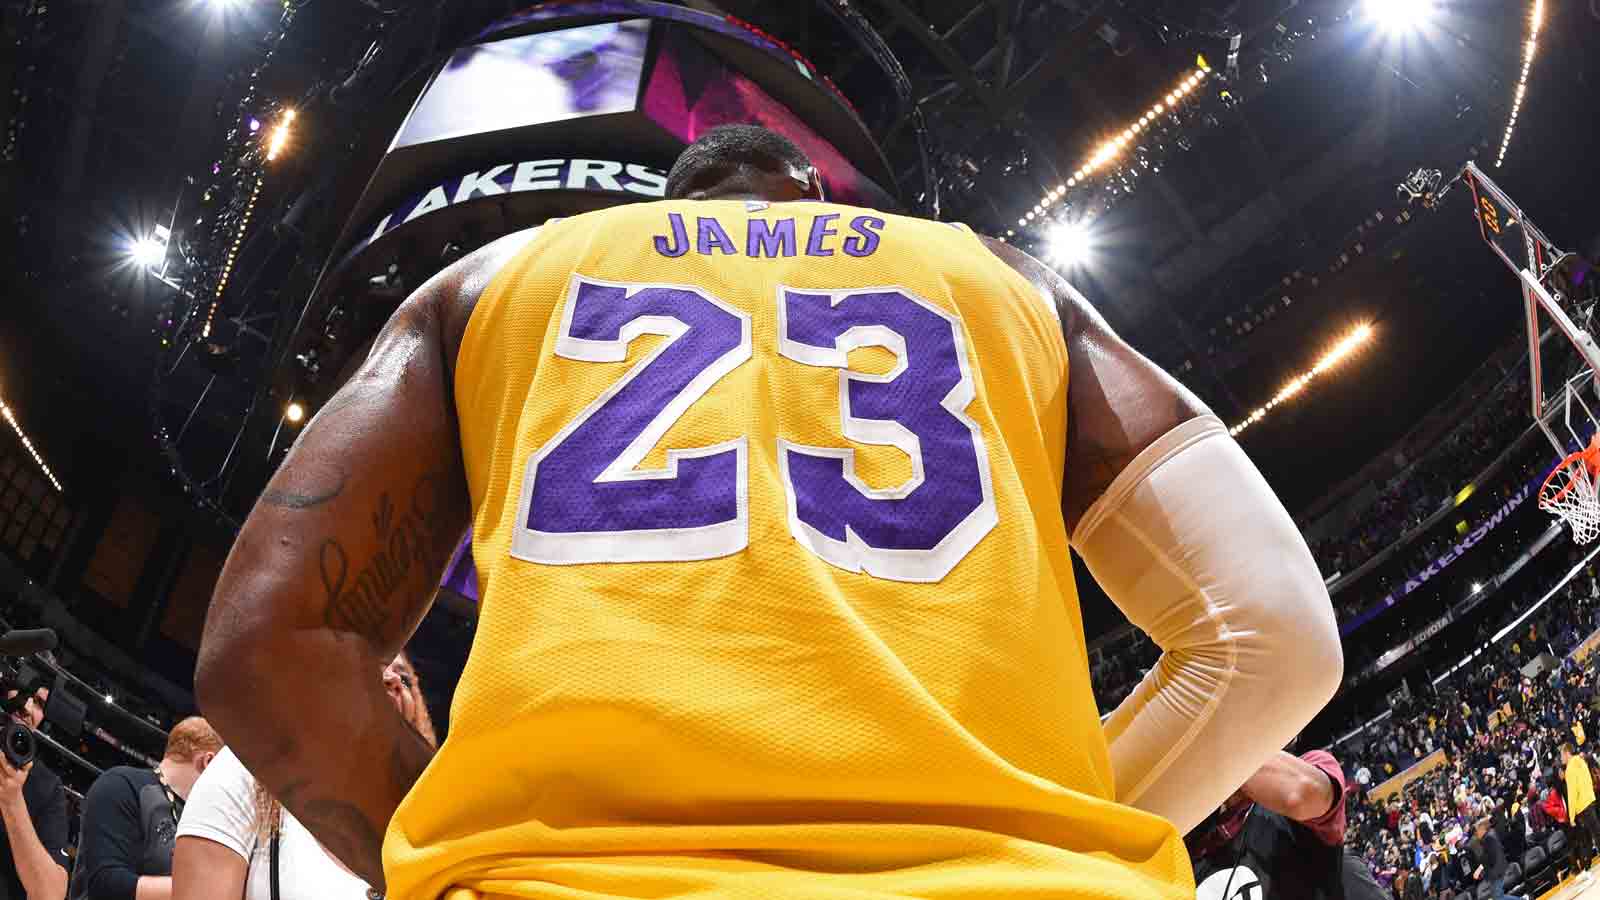 LeBron, Kobe top NBA jersey sales list during holidays - NBC Sports